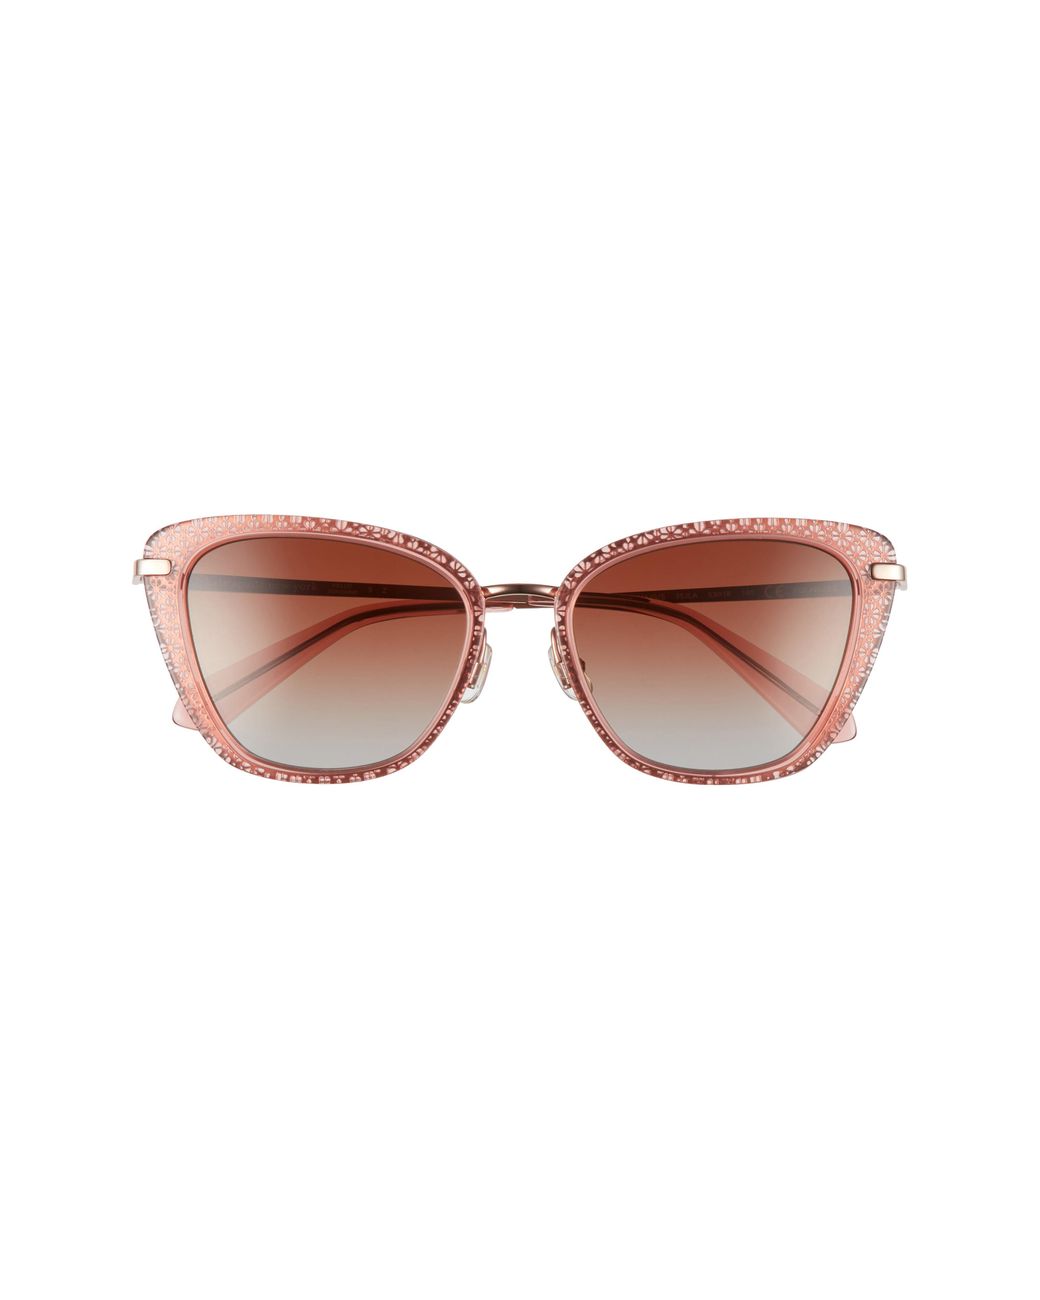 Kate Spade Thelma 53mm Gradient Cat Eye Sunglasses in Brown - Lyst